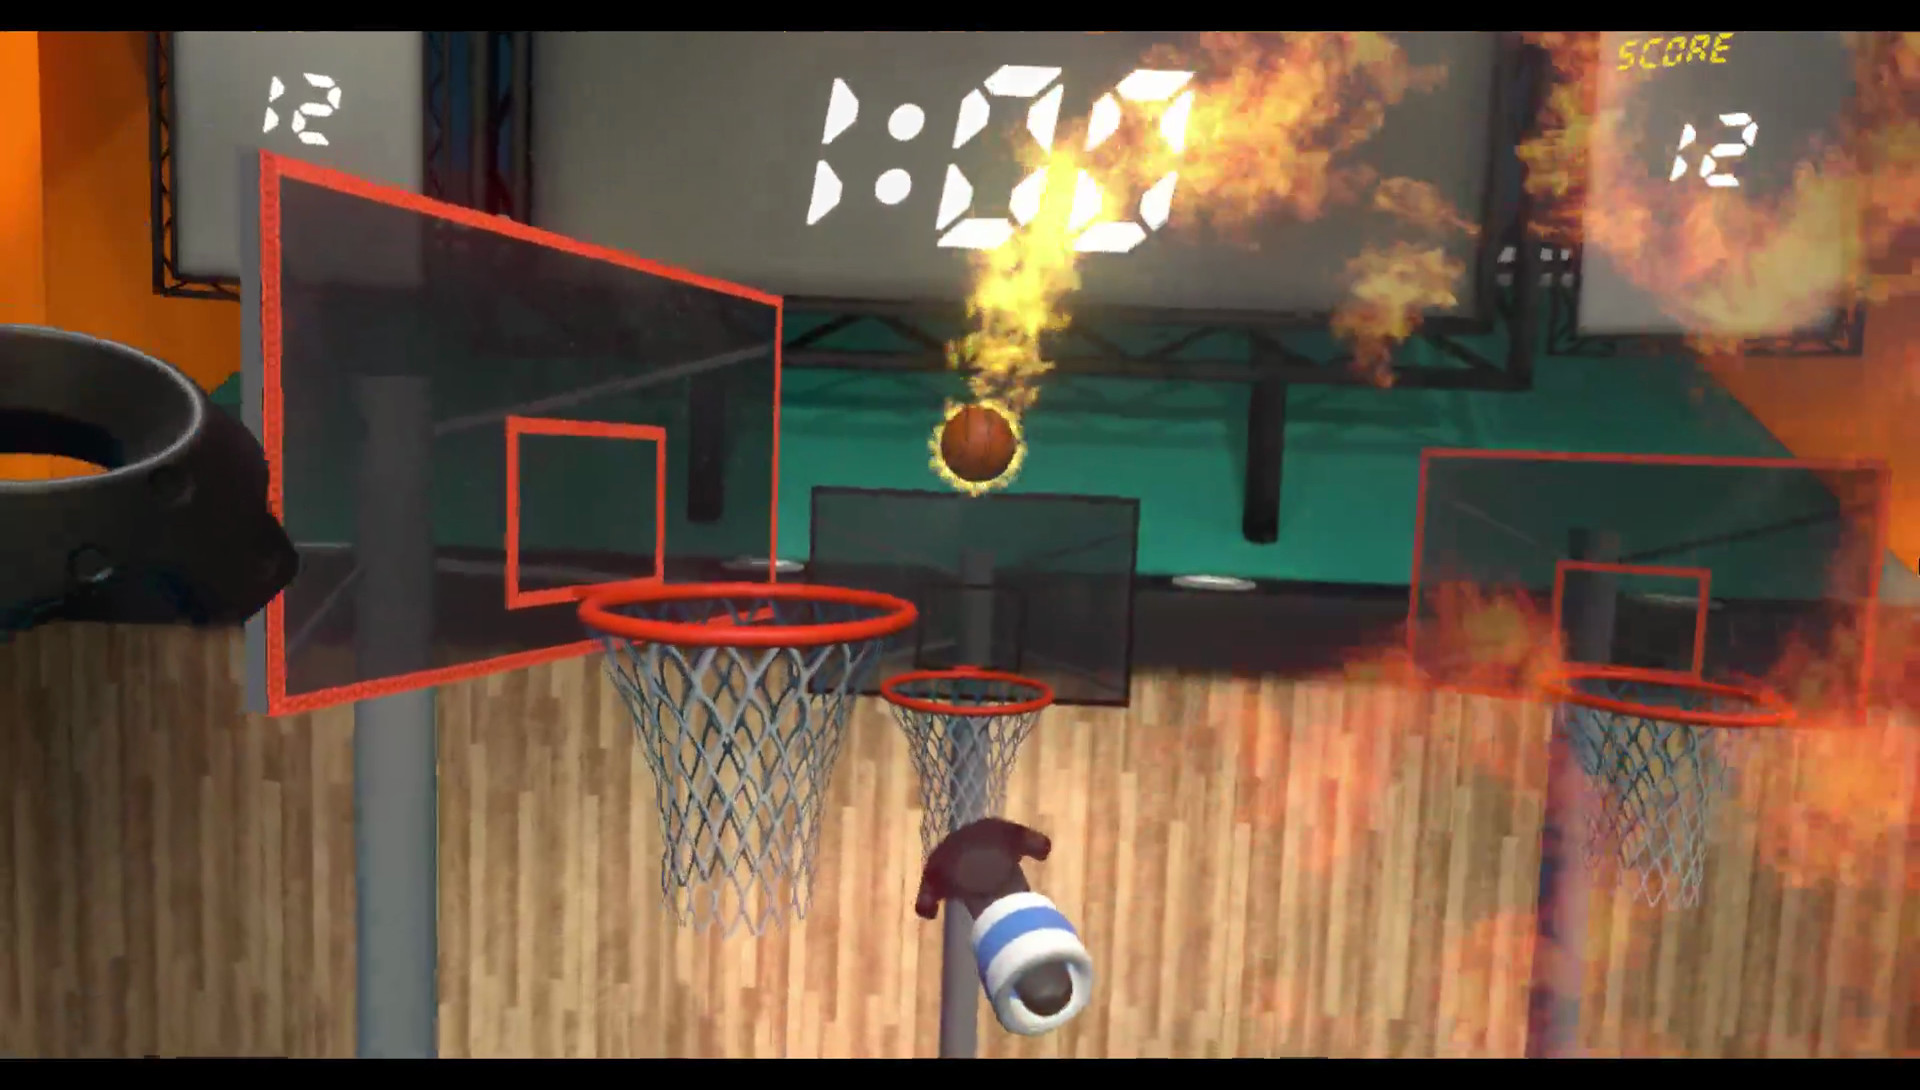 Hoops VR screenshot